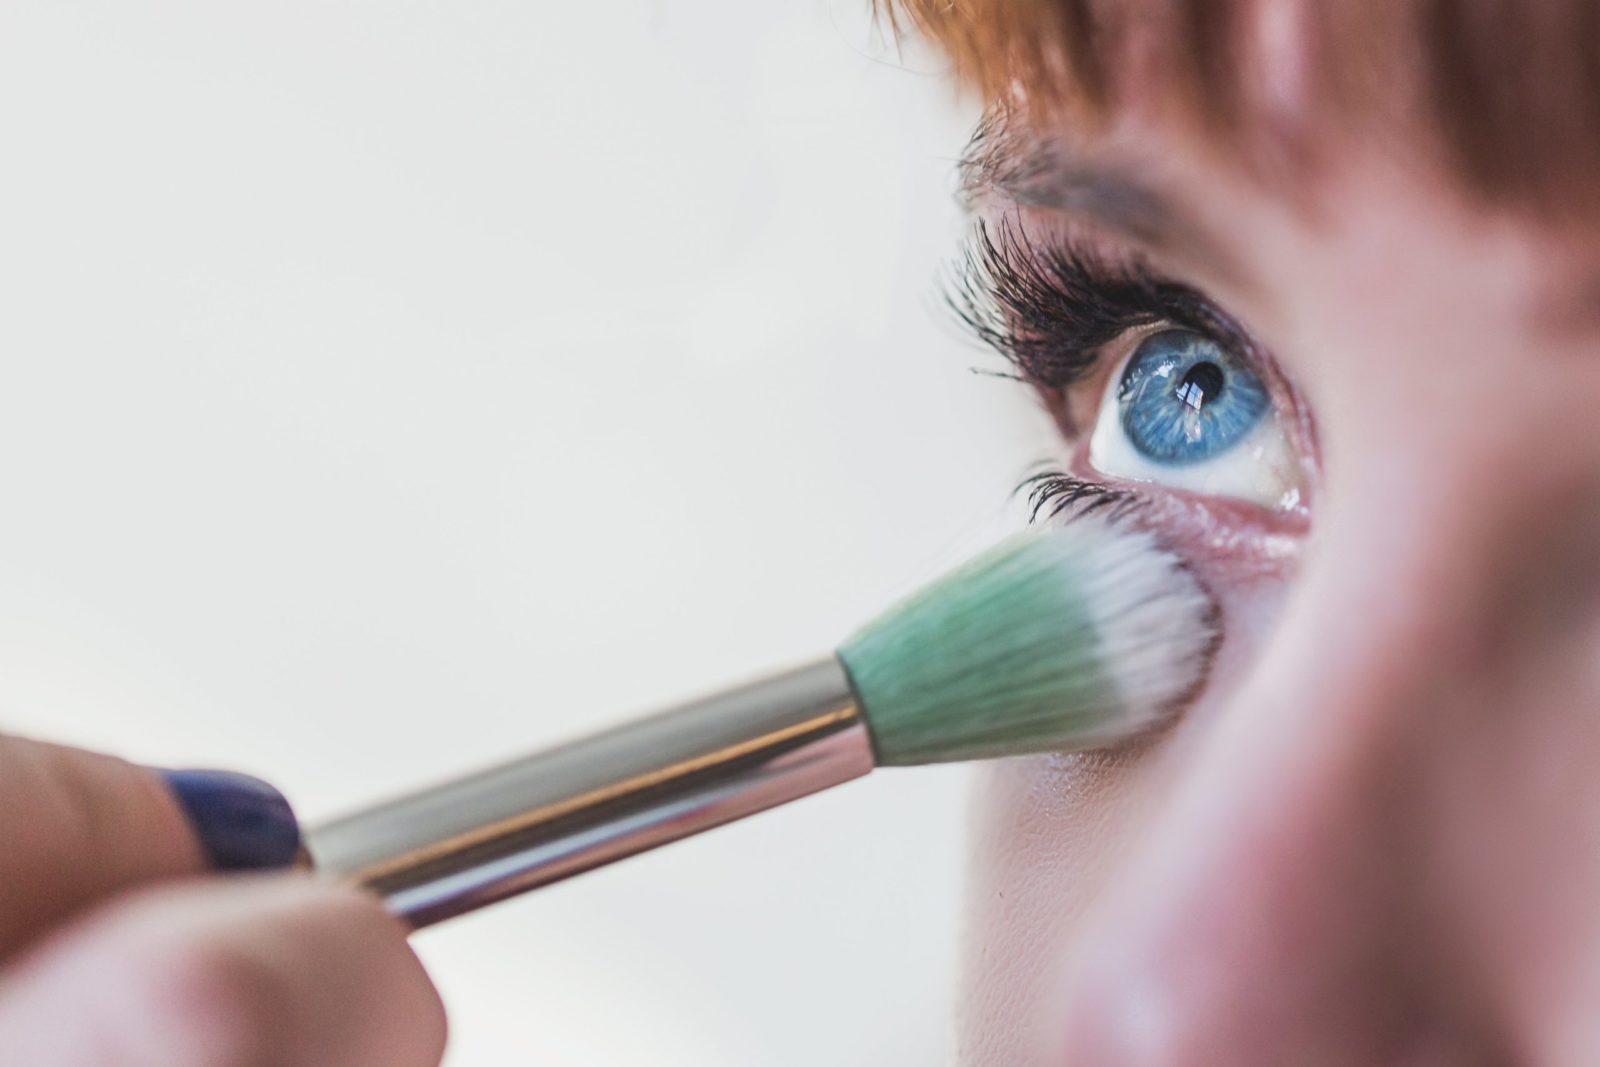 https://atelier-epil.com/wp-content/uploads/2021/03/blue-eyes-getting-makeup-close-up-scaled.jpg